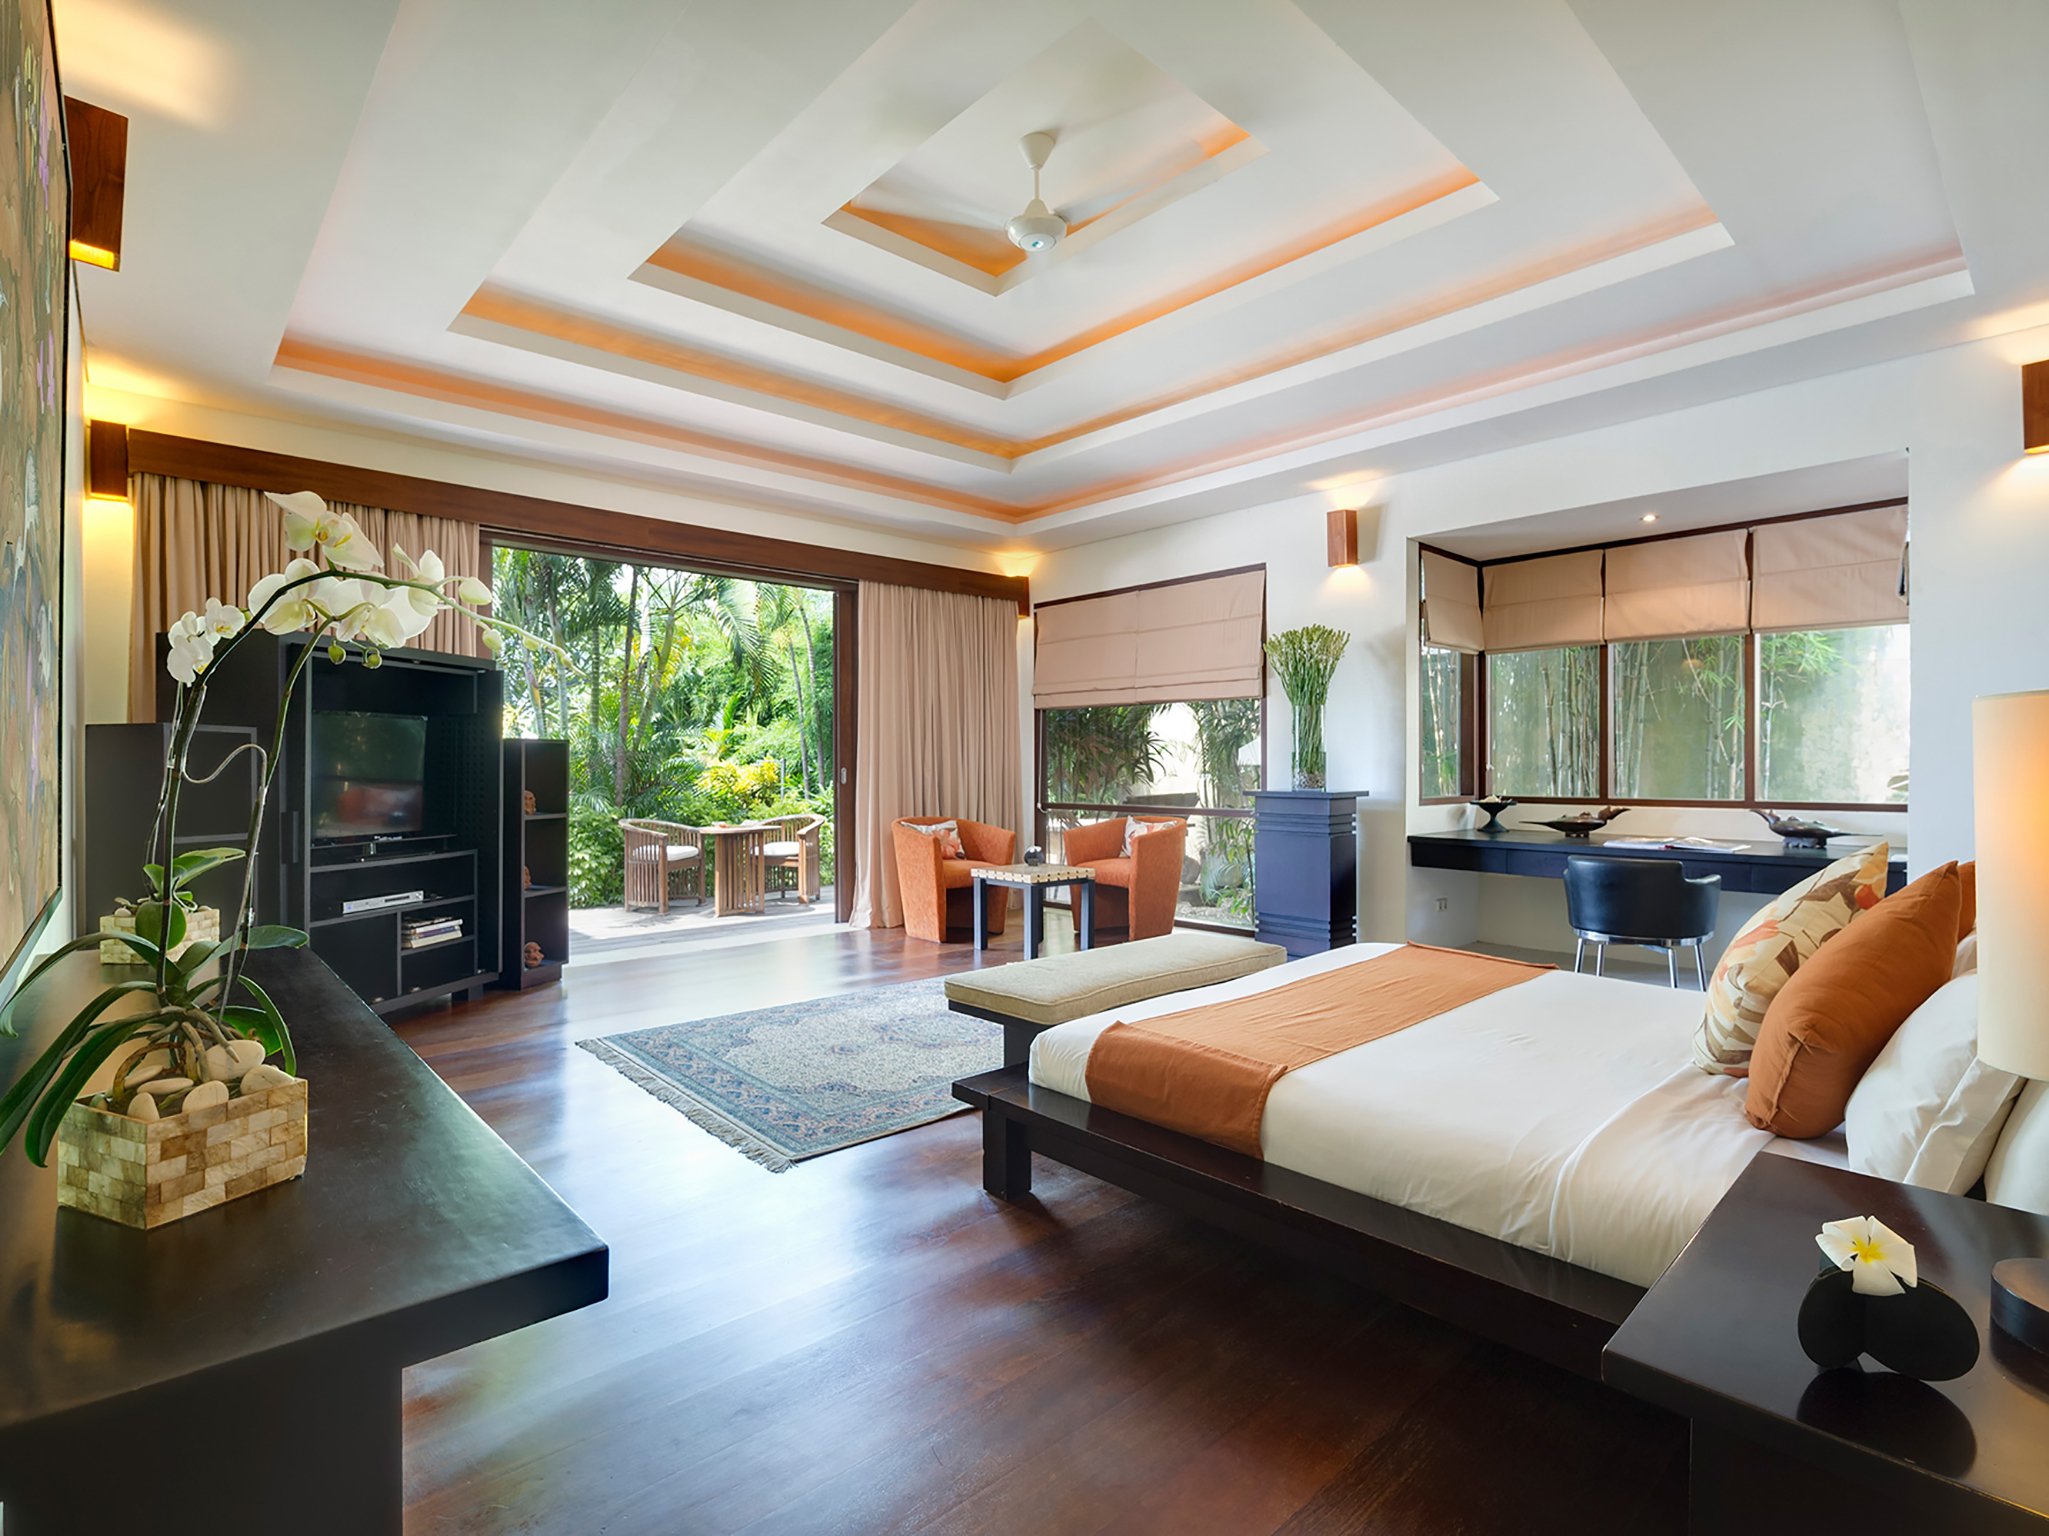 Flexible Accommodation, Image from Mandalay Villas website